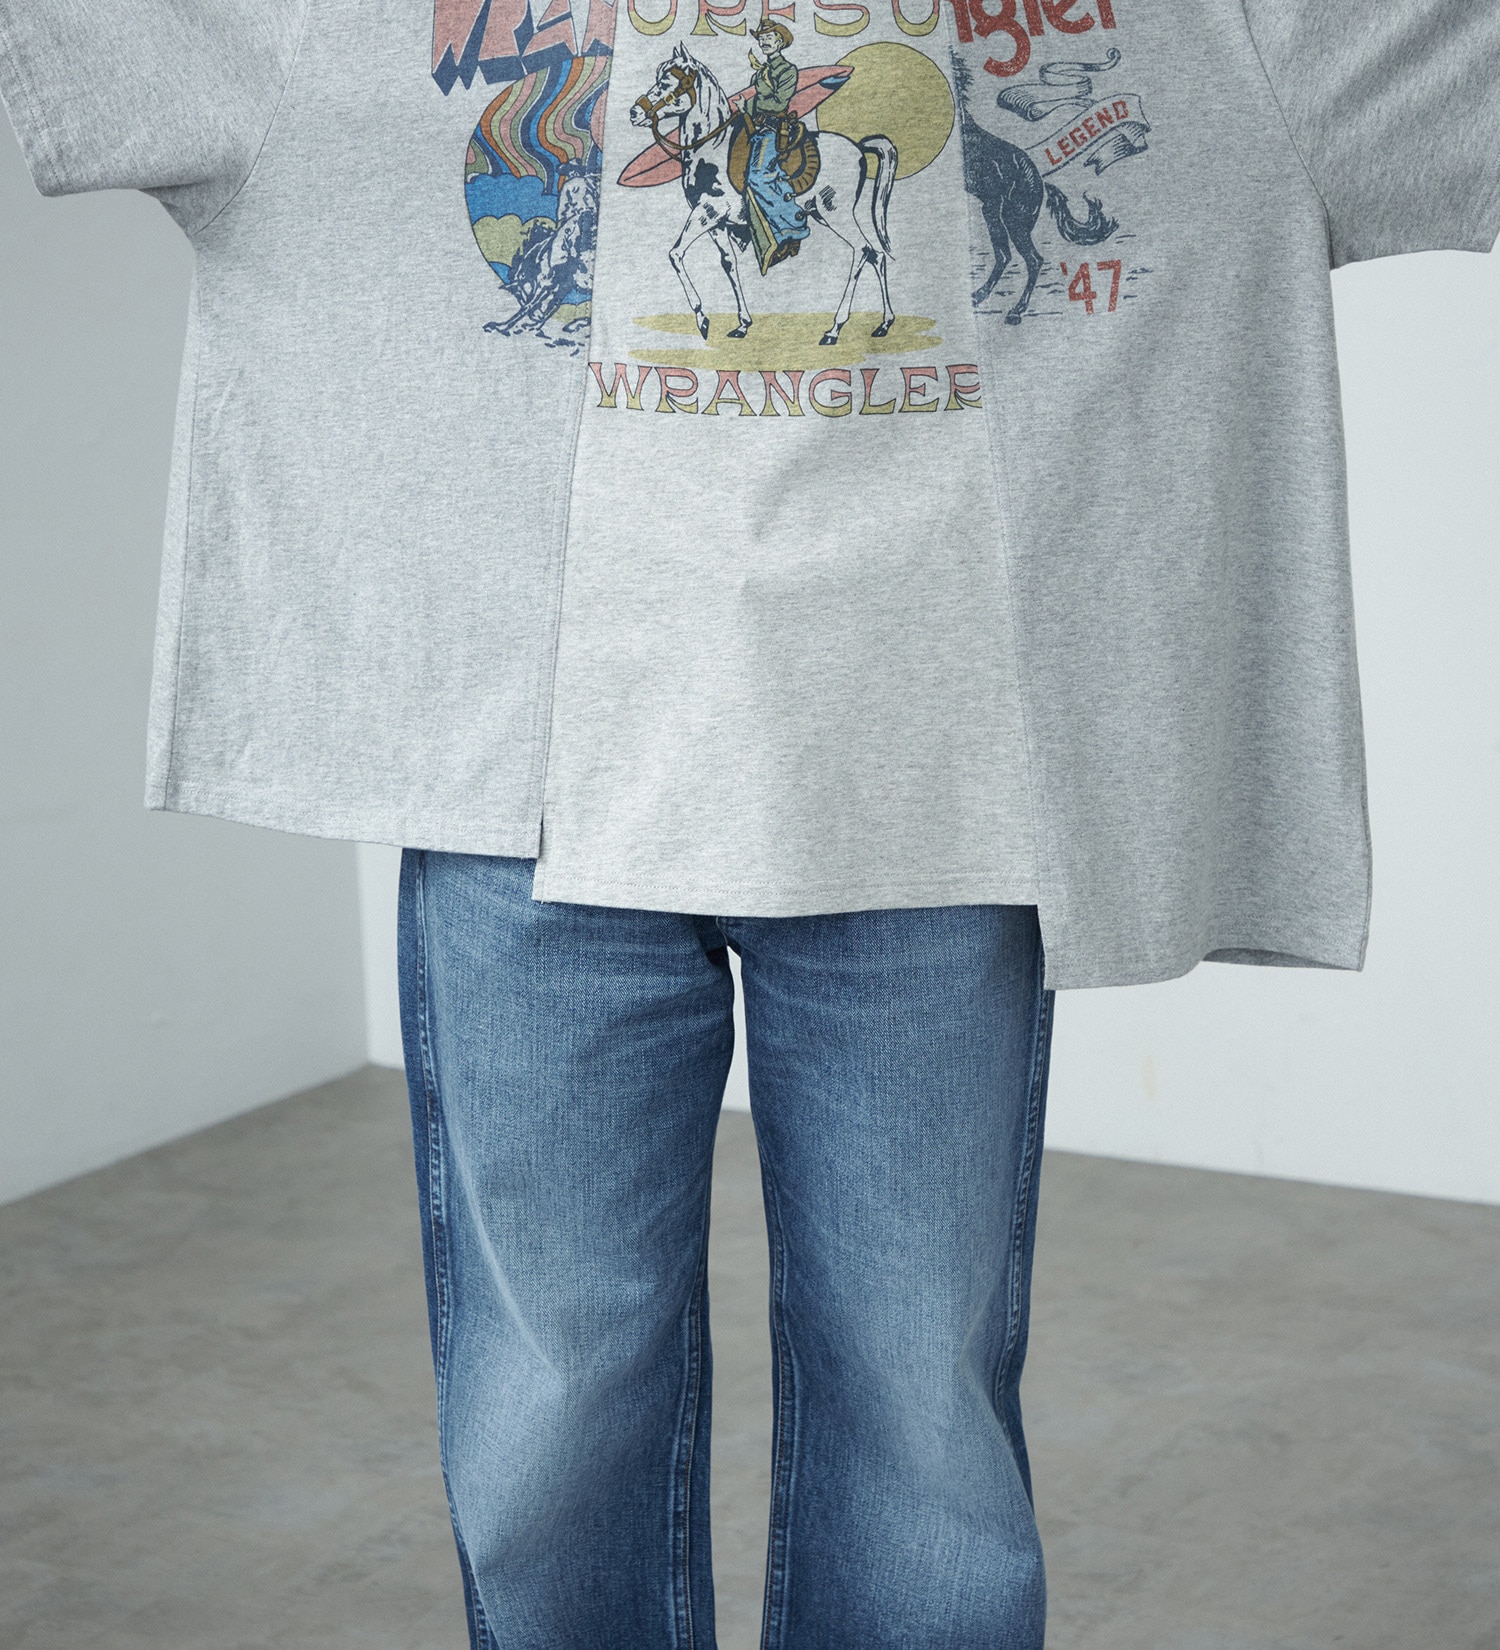 Wrangler(ラングラー)のリメイク ショートスリーブTee|トップス/Tシャツ/カットソー/メンズ|グレー